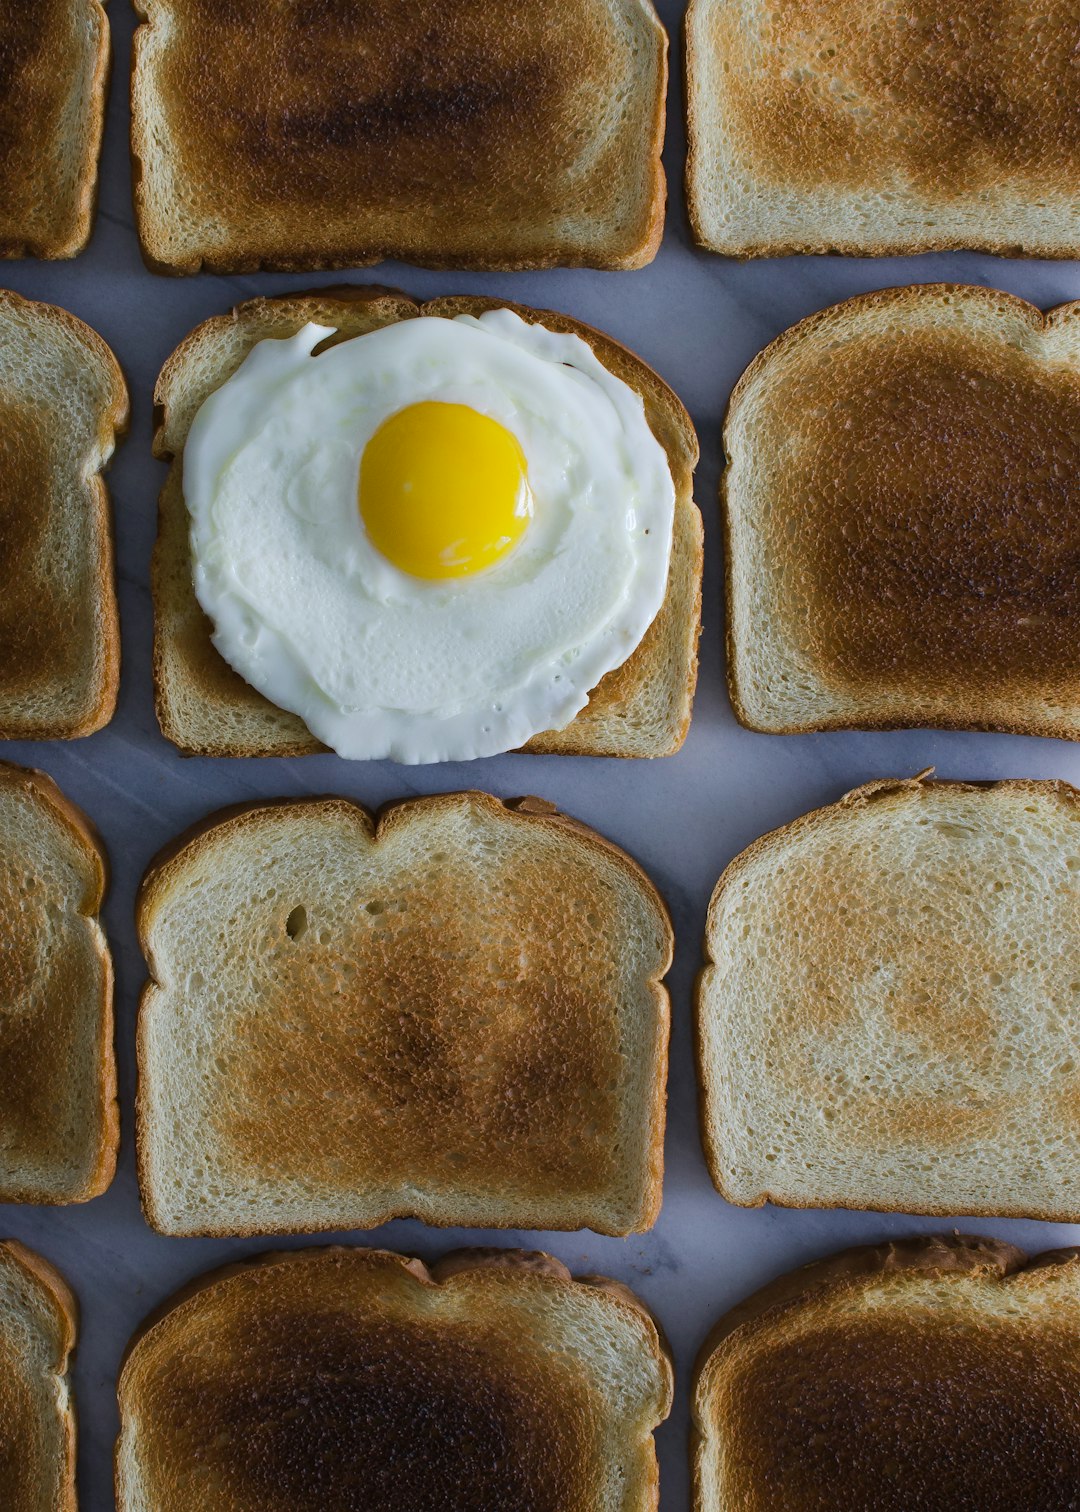 JUST KIDDING AROUND: WHY EVERYONE NEEDS TO CARTWHEEL (and eat cinnamon toast!!)